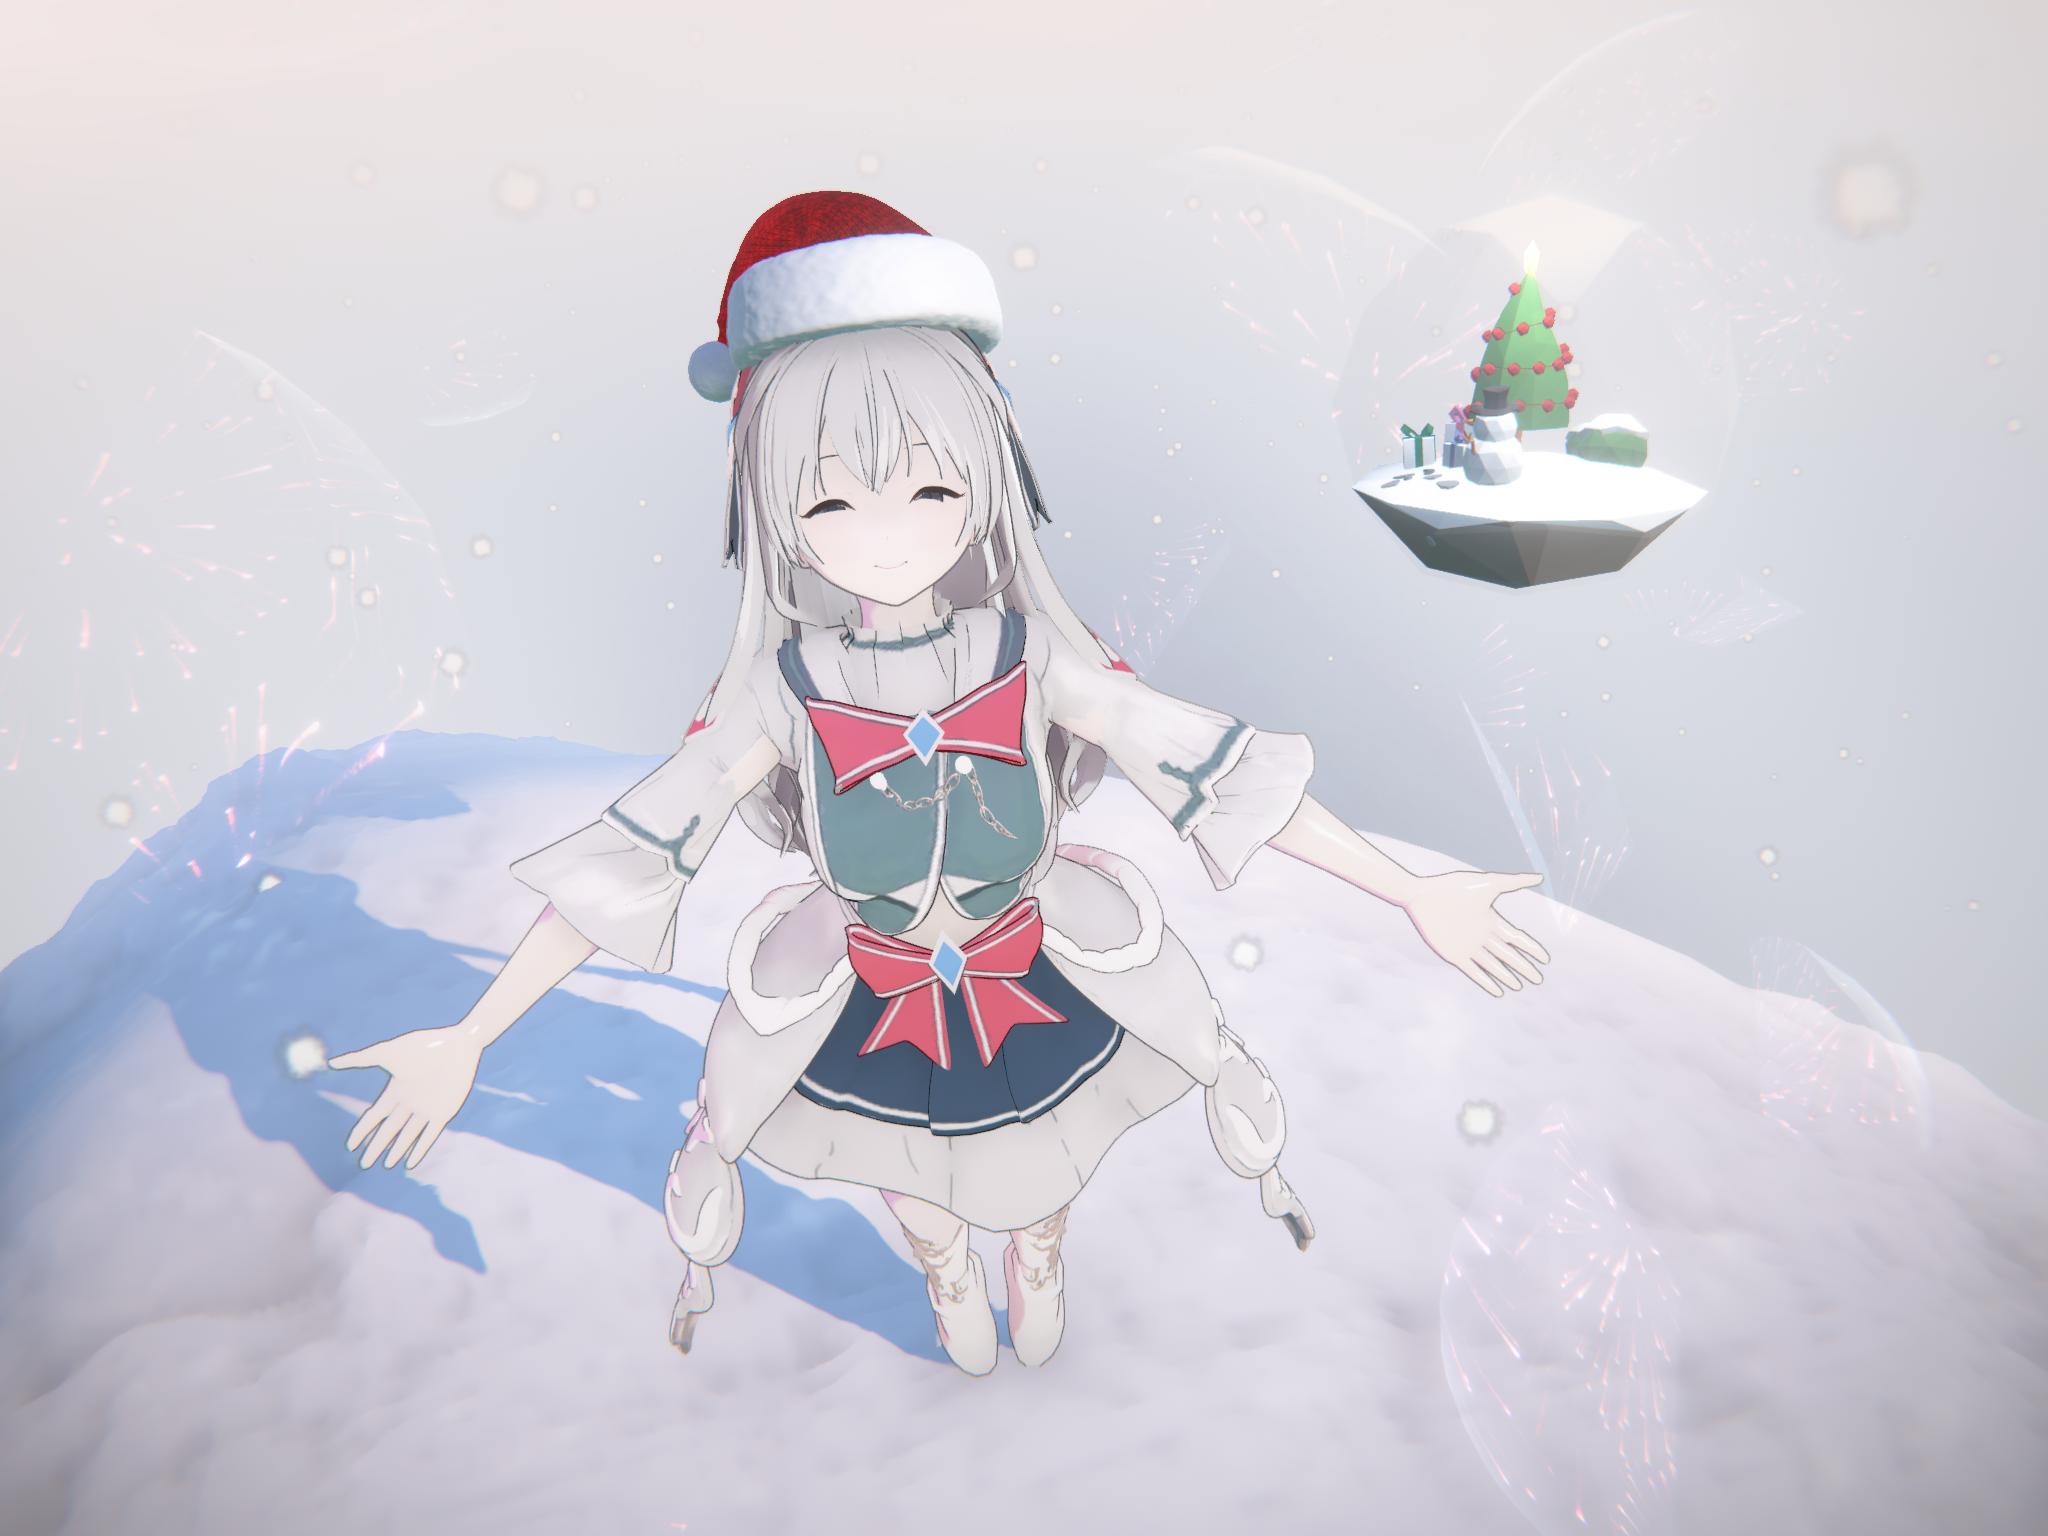 Hikari CG, created in celebration of Christmas